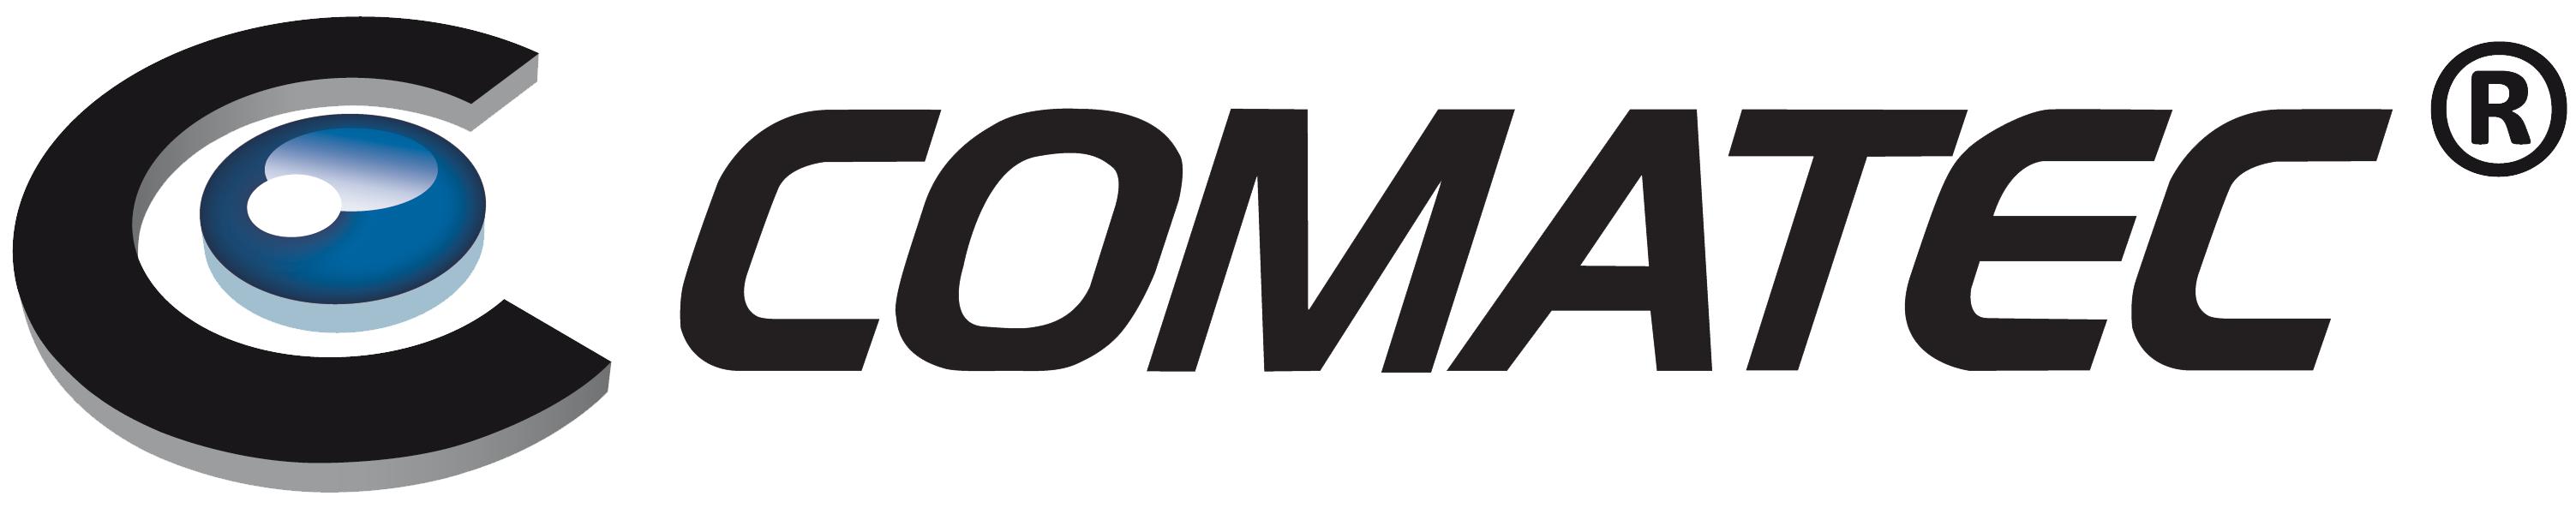 Comatec_Group_logo_www